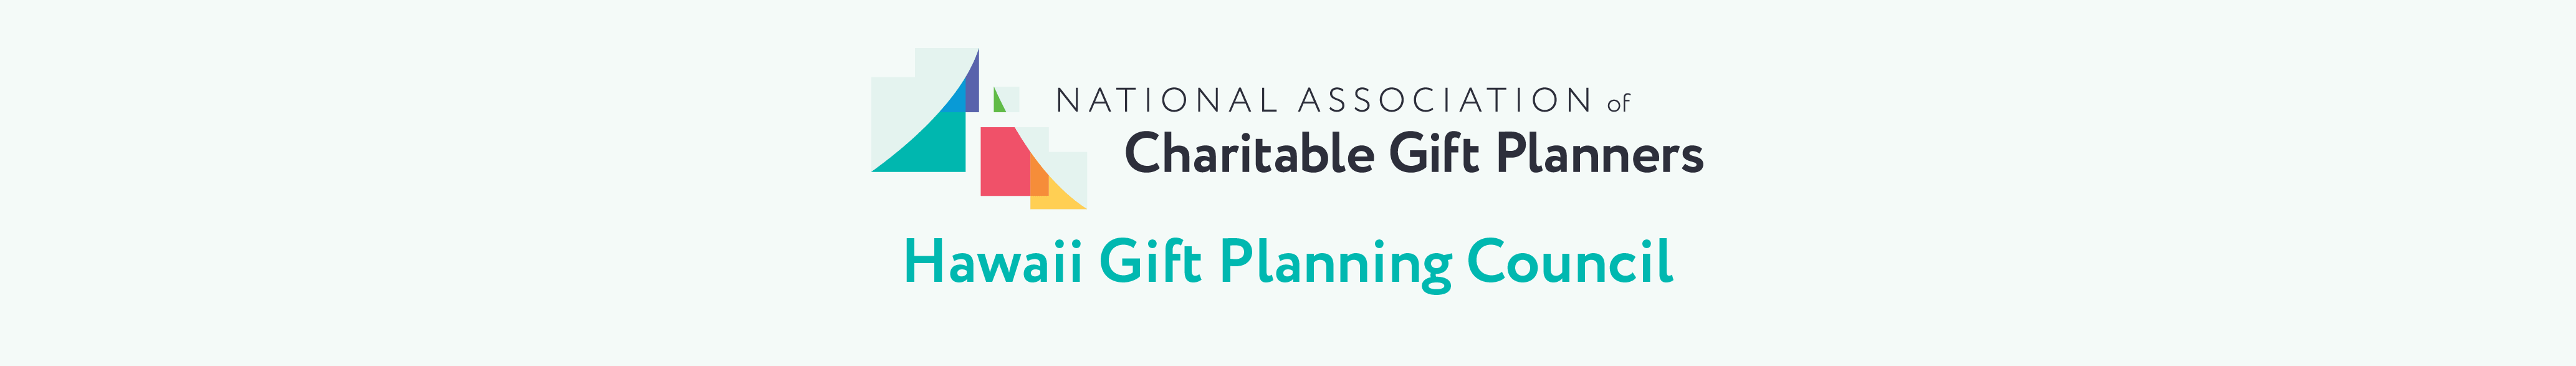 Hawaii Gift Planning Council Logo